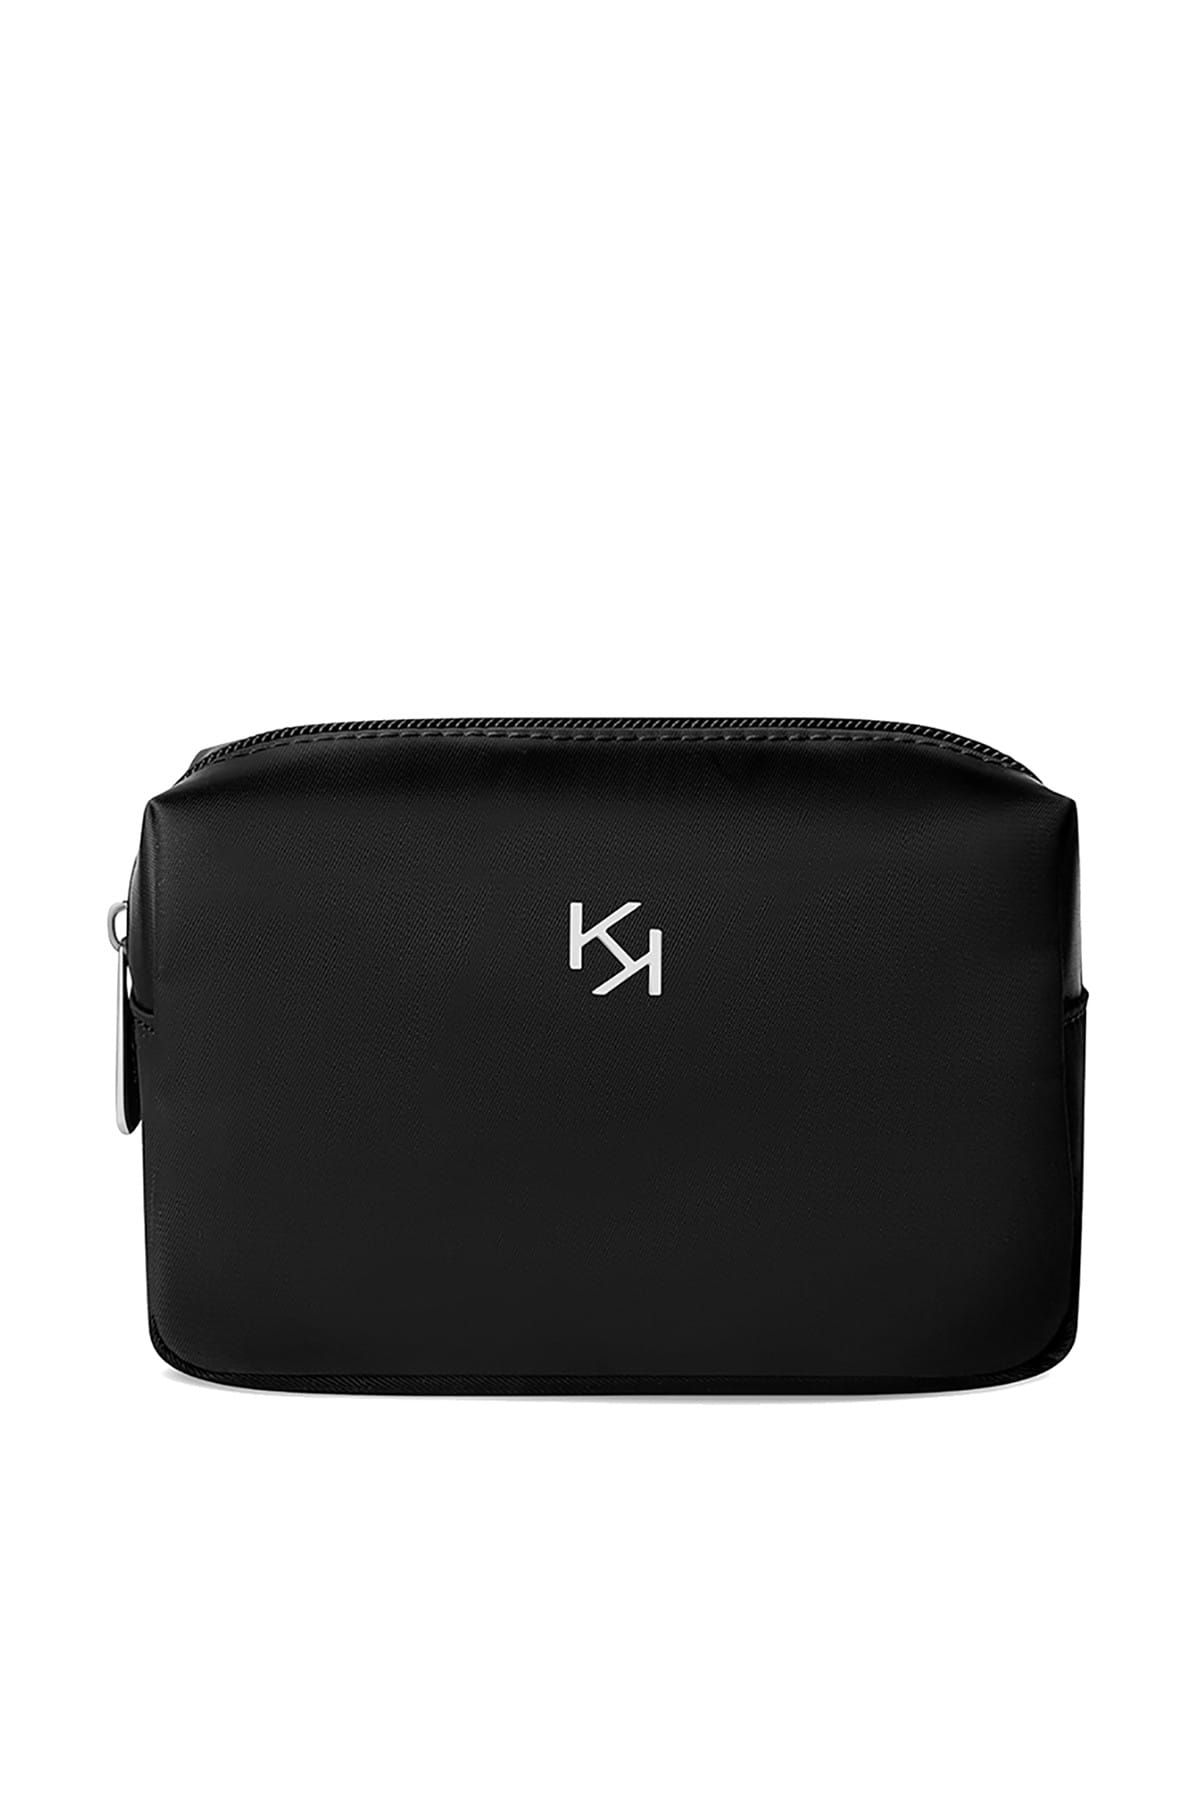 KIKO کیف آرایشی متوسط اندازه کیس زیبایی متوسط 8025272631754